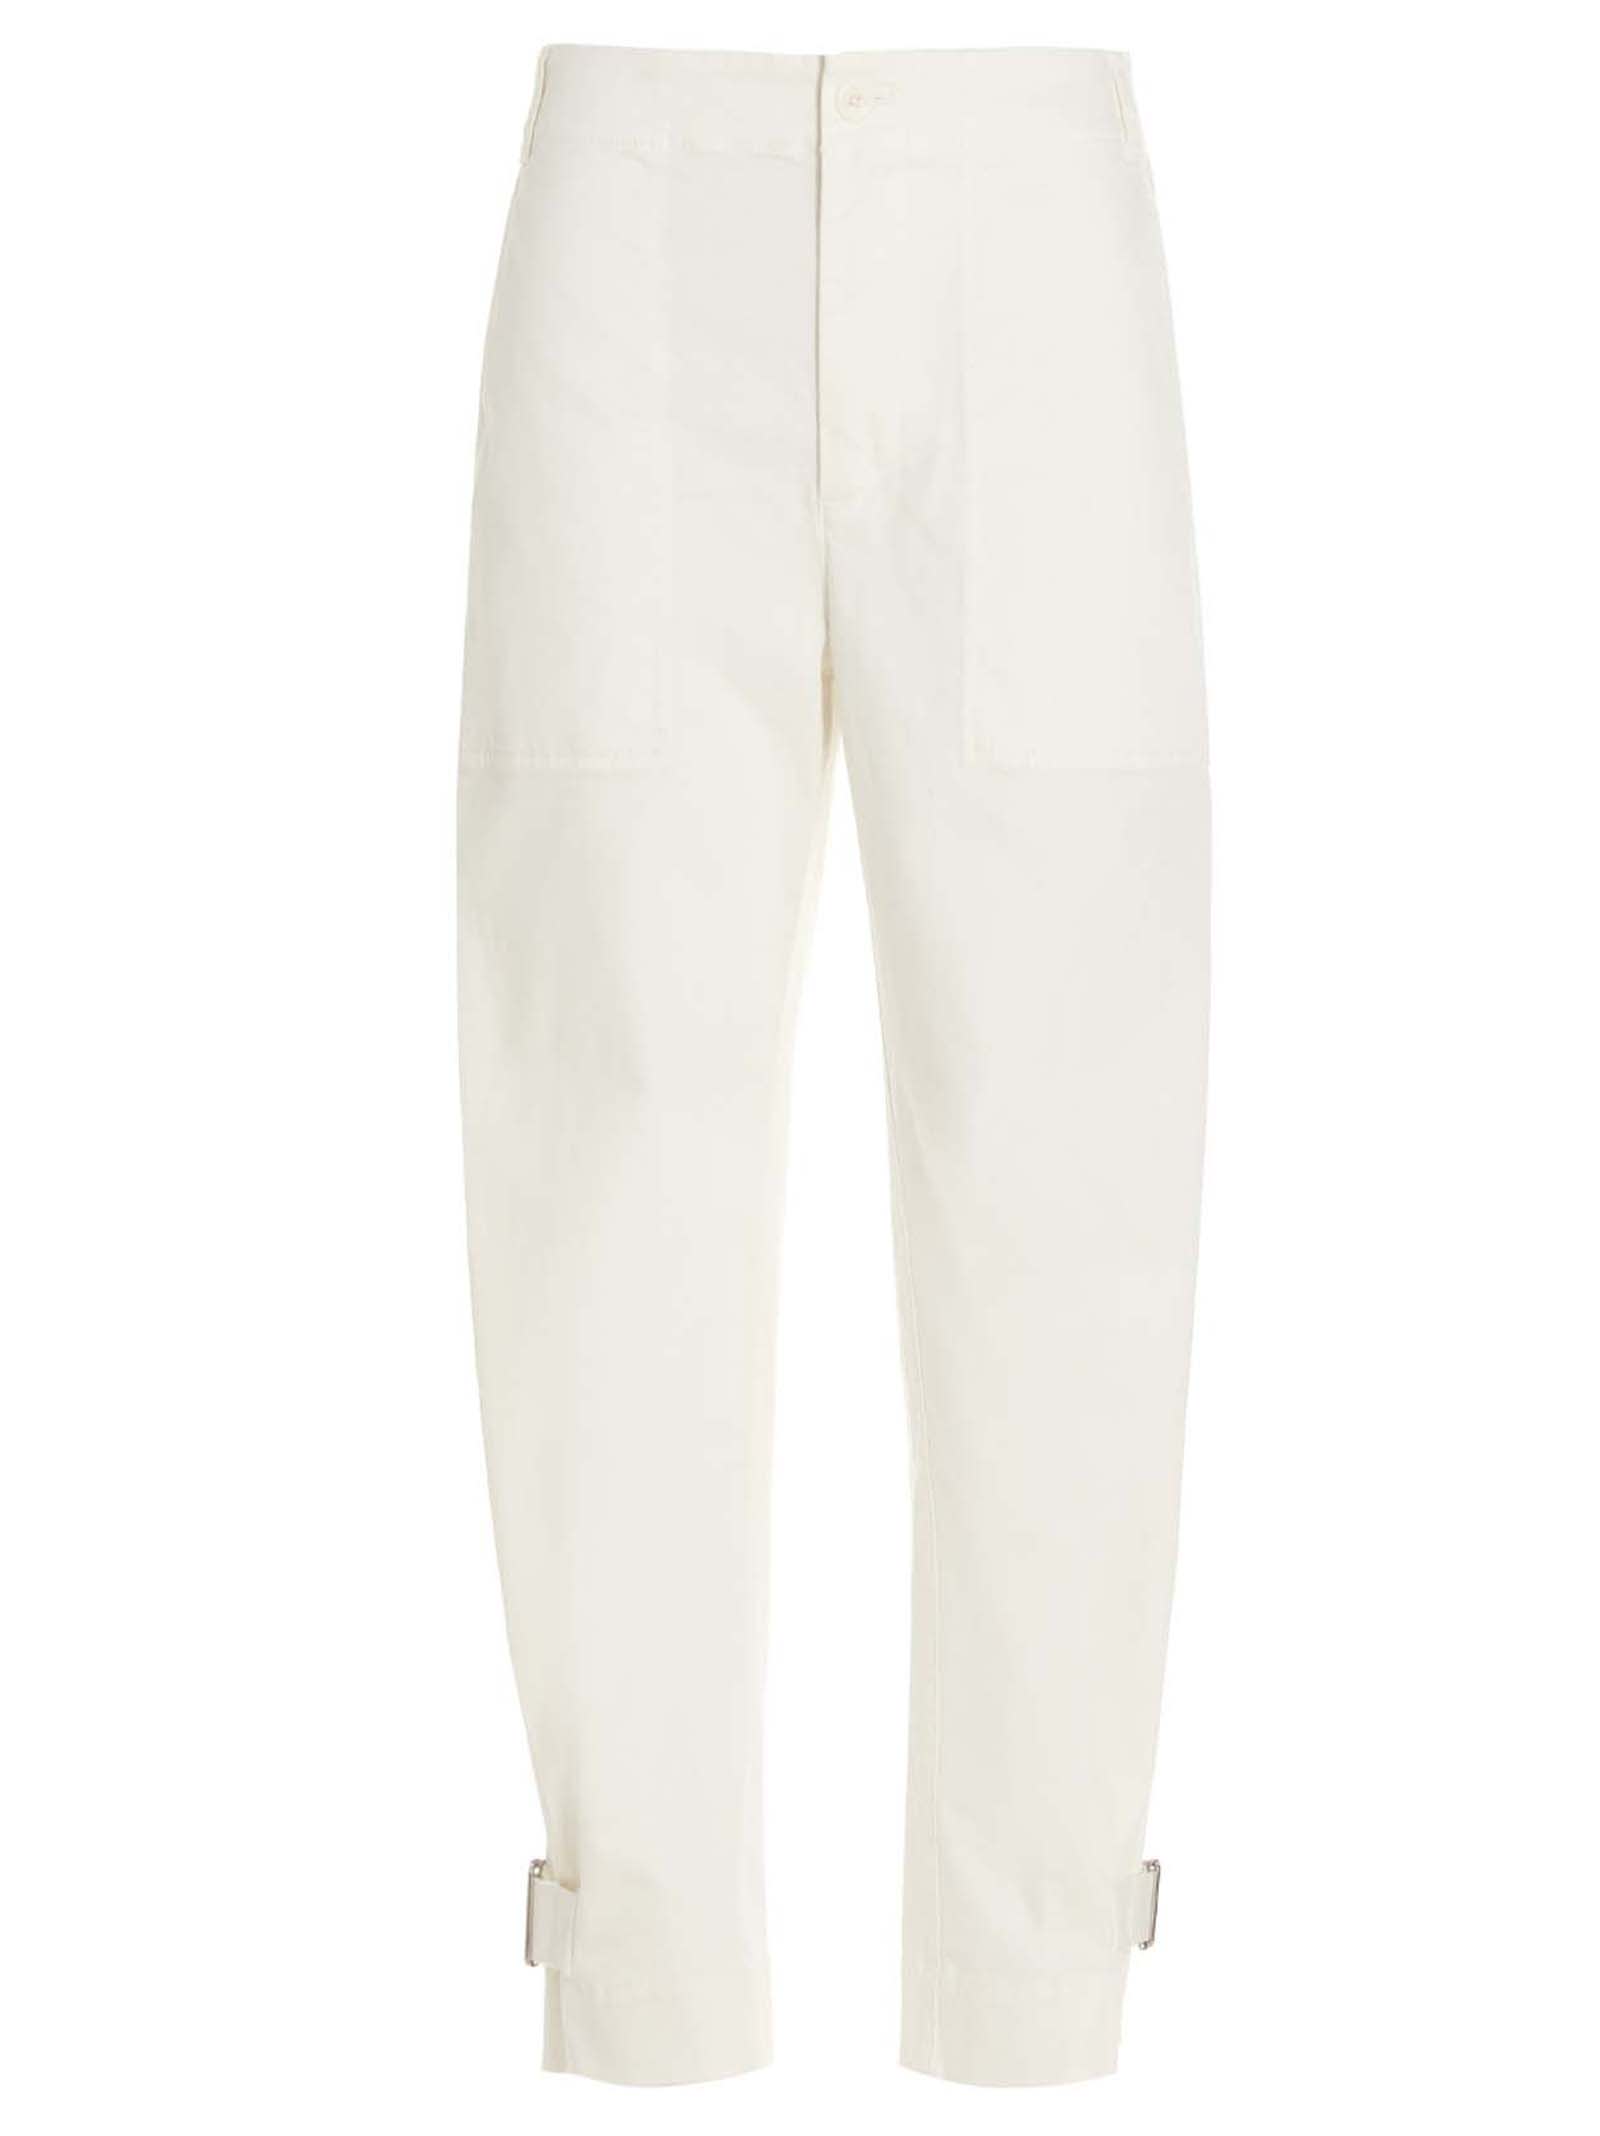 Proenza Schouler White Label Buckle Strap Trousers